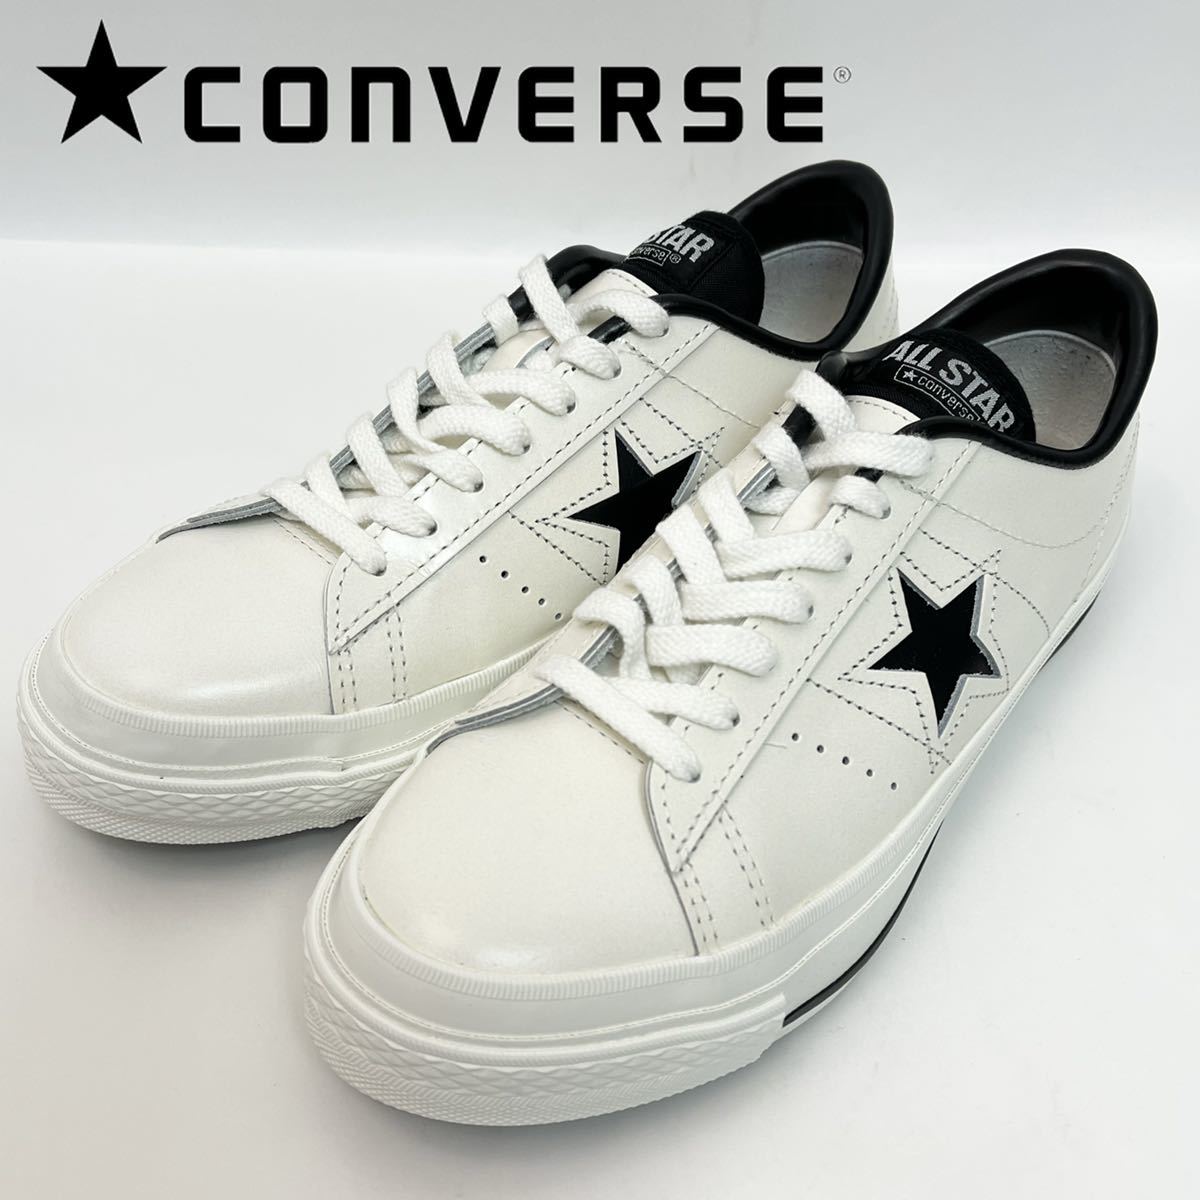 Converse ALL STAR コンバース オールスター One Star J ワンスター White Black 日本製 靴 スニーカー  23cm 白 黒